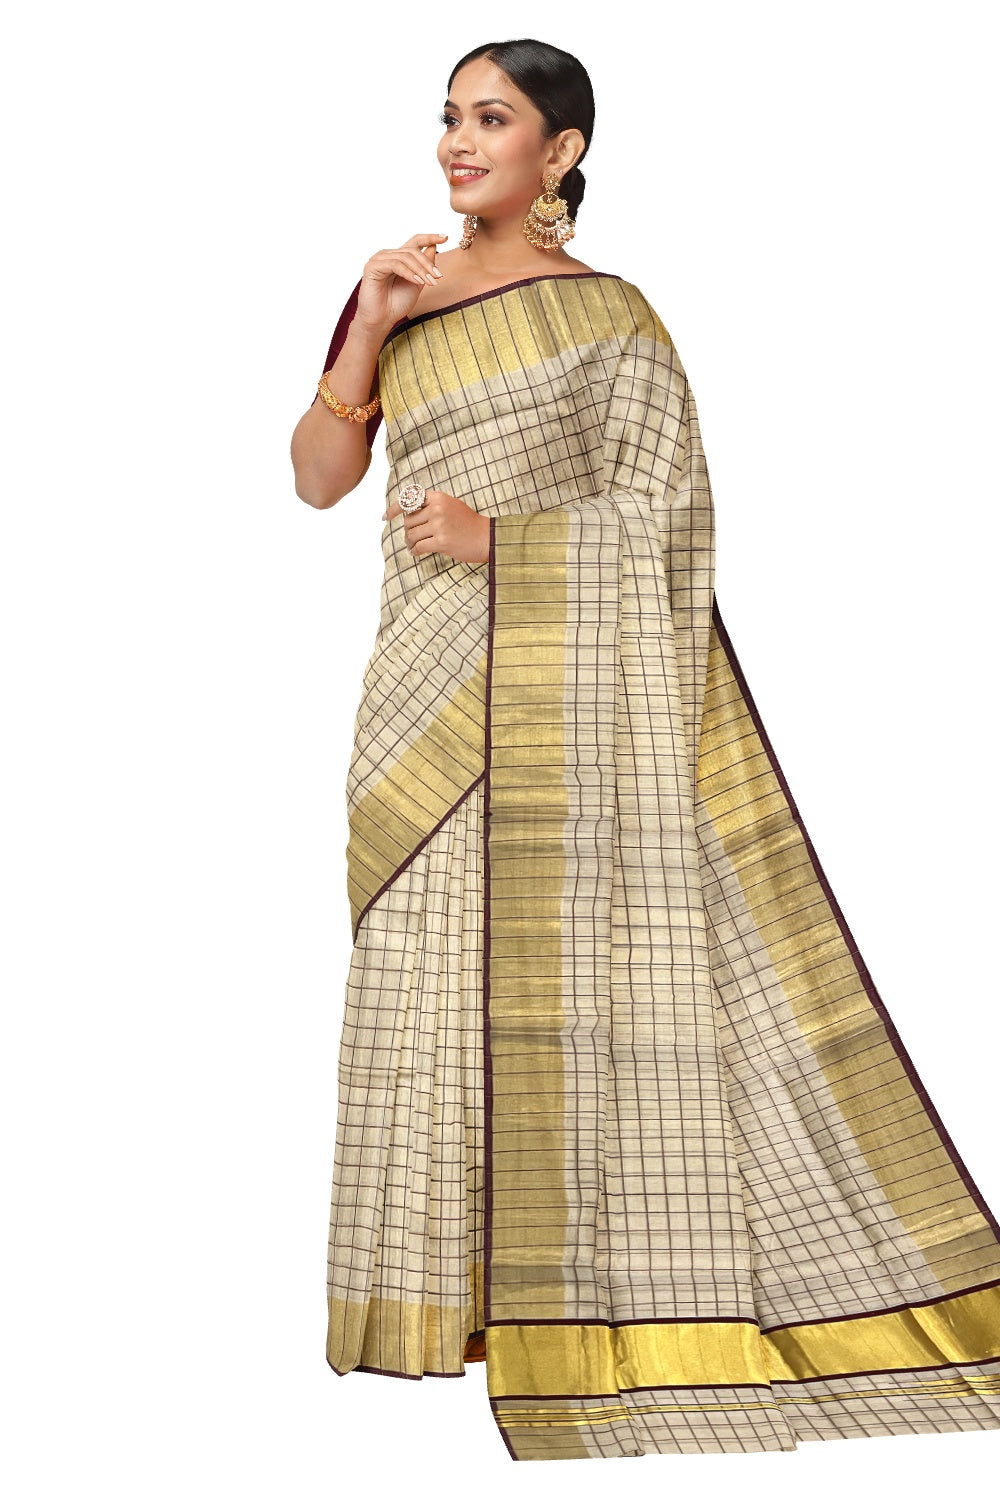 Southloom Premium Handloom Tissue Check Design Saree with Maroon and Kasavu Border